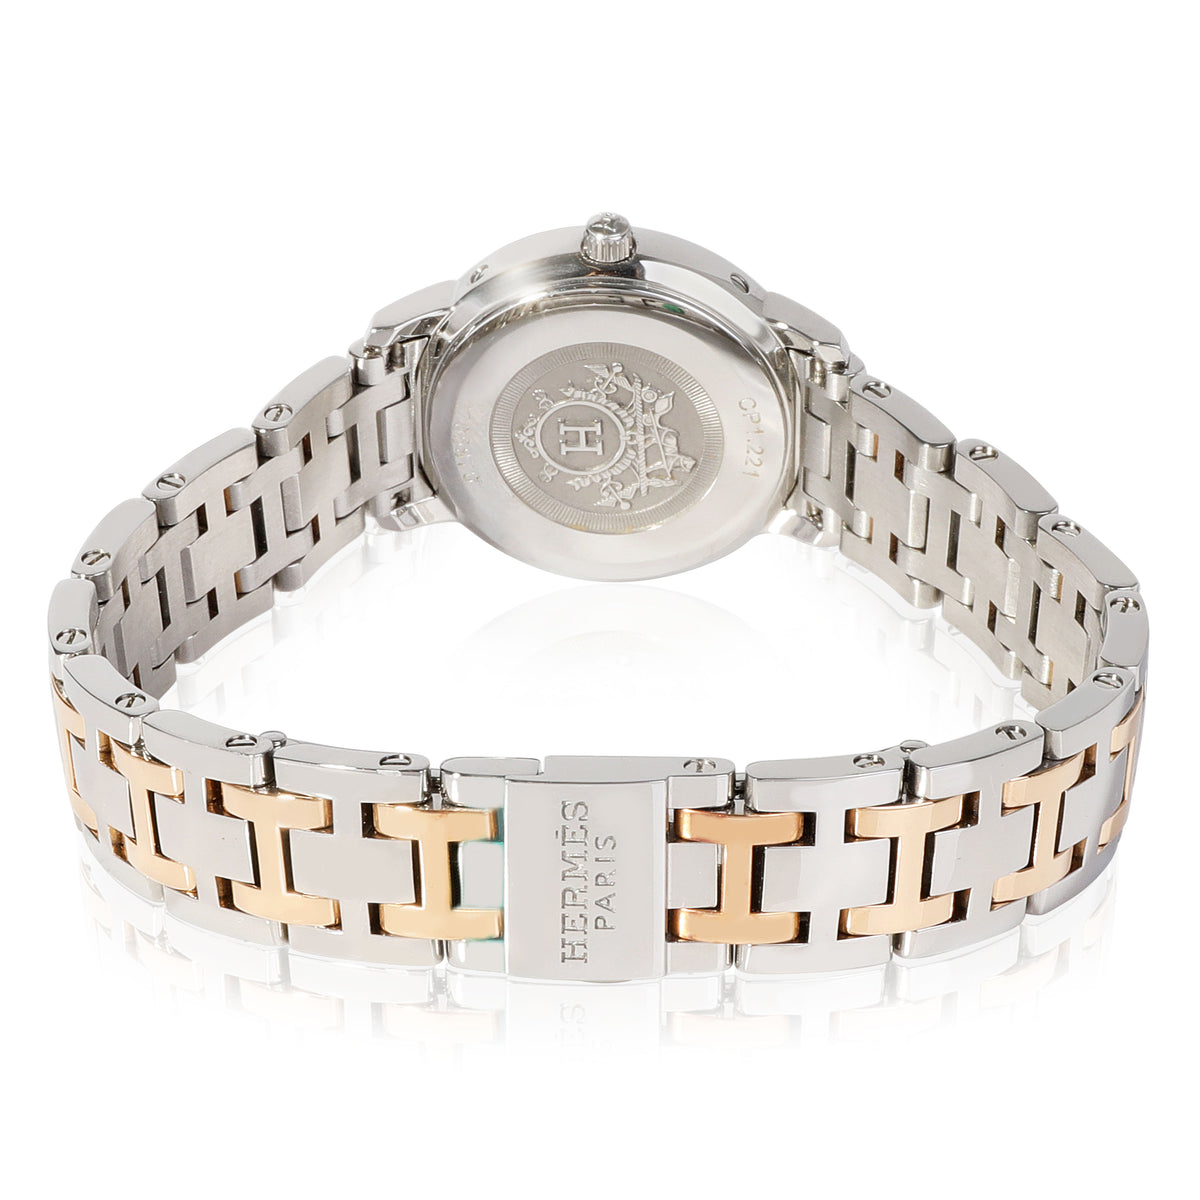 Hermès Clipper CP1.221.212.4970 Women's Watch in 18kt Stainless Steel/Rose Gold